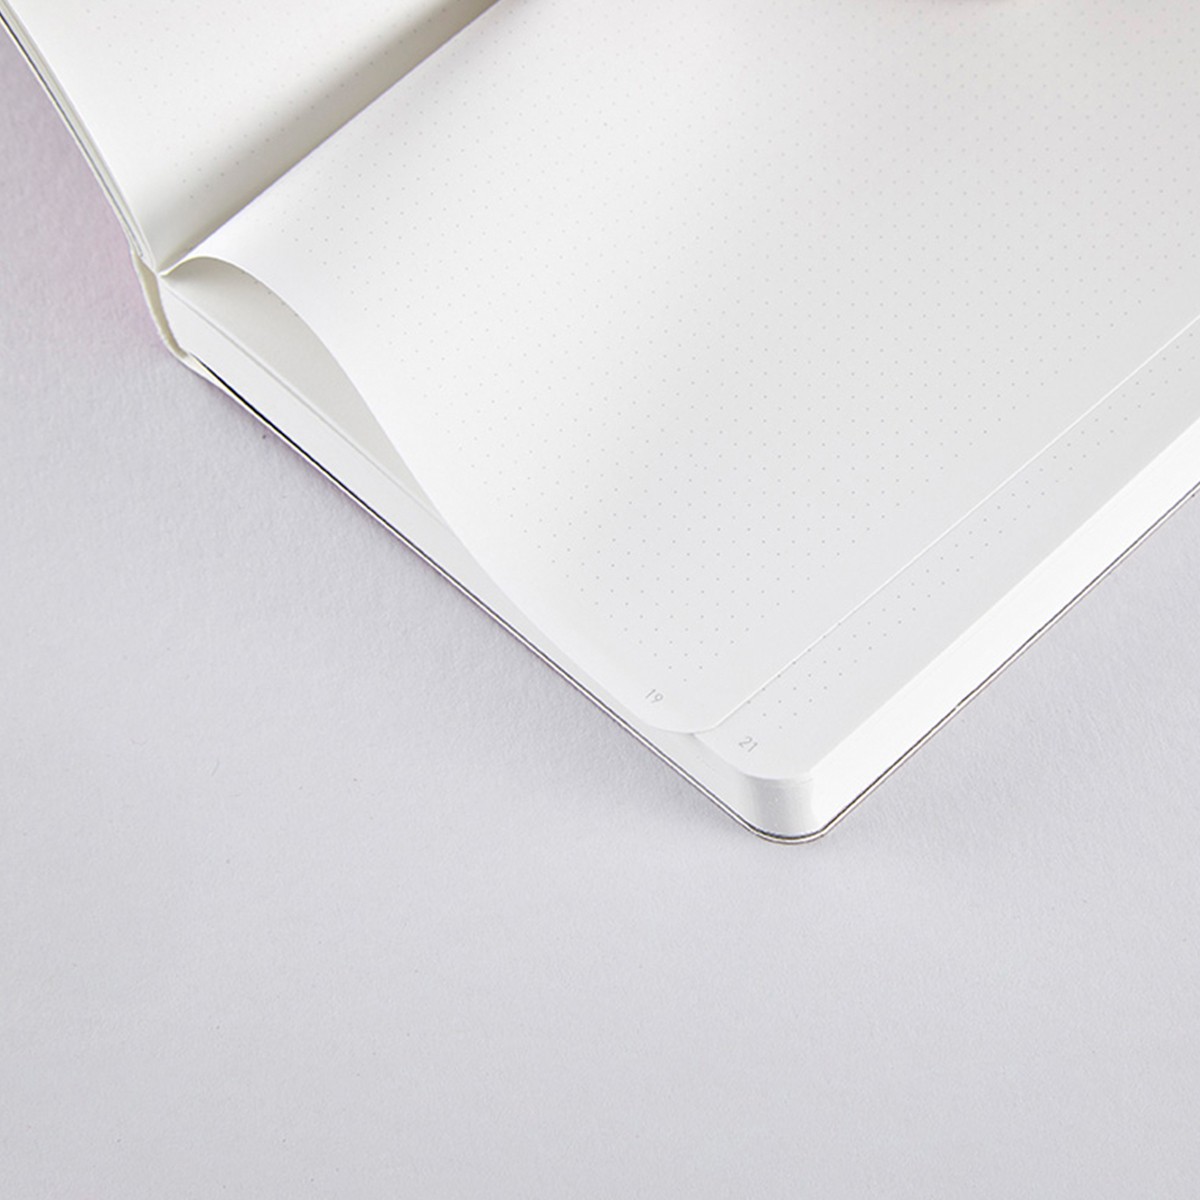 Nuuna Notebook Pearl S - ROSE